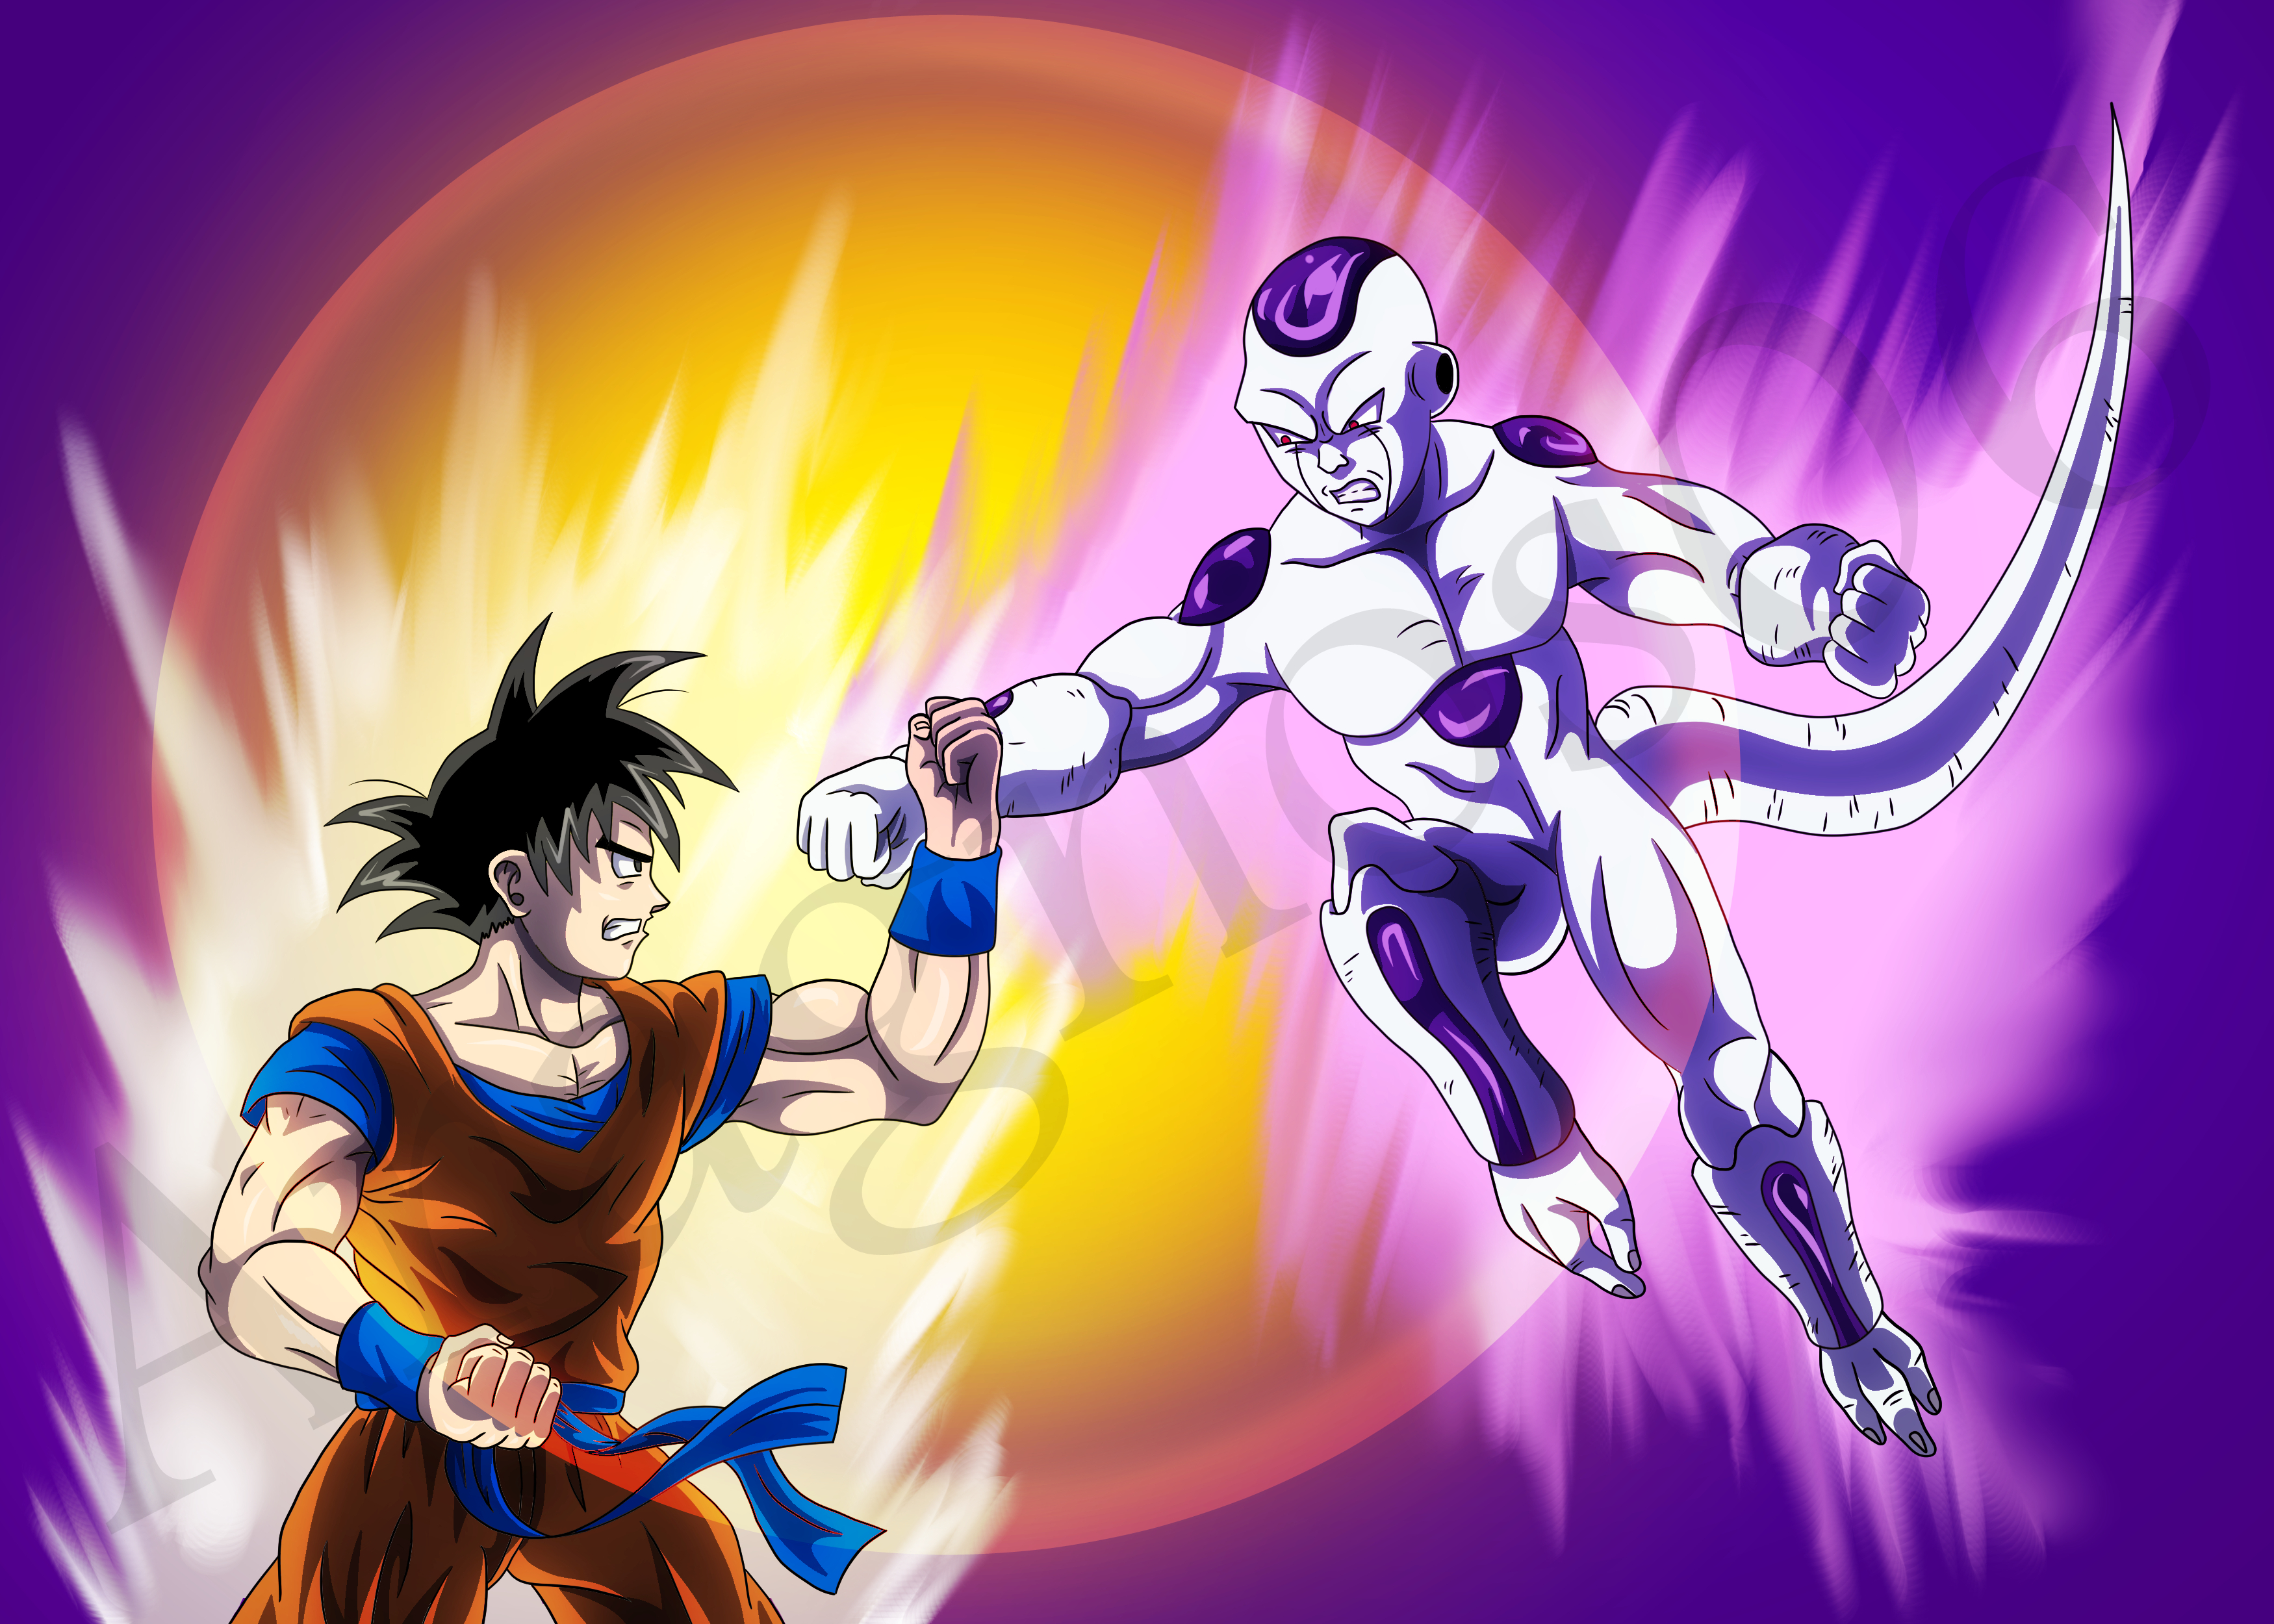 Goku VS Freezer (Dragon Ball Z) by Aragnos06 on DeviantArt